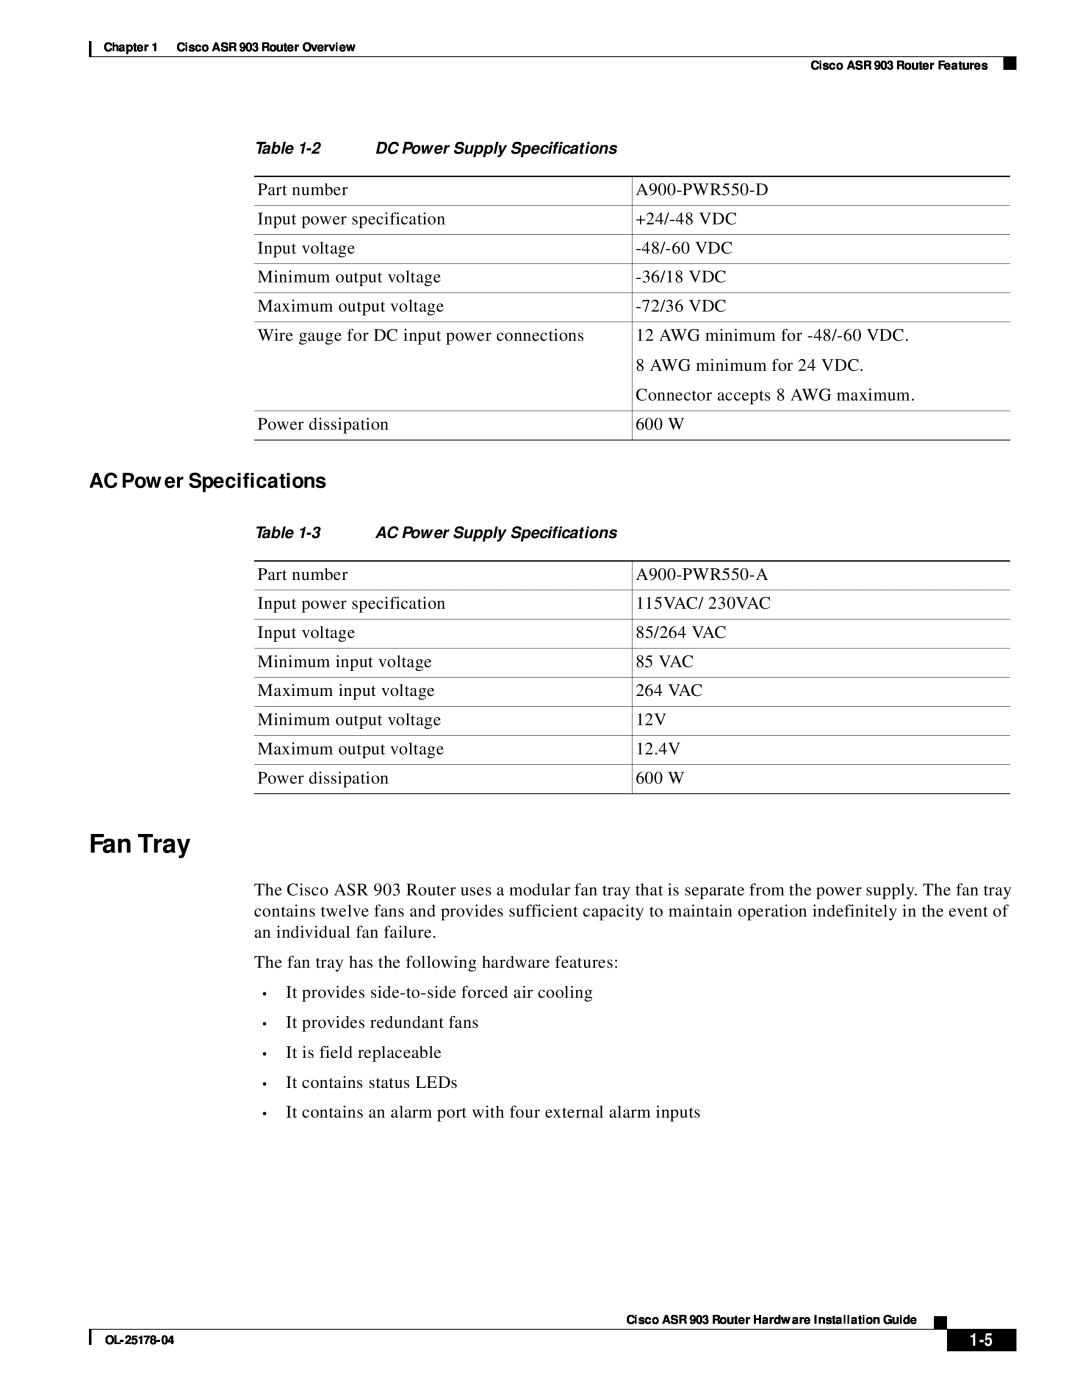 Cisco Systems ASR 903 manual Fan Tray, AC Power Specifications 